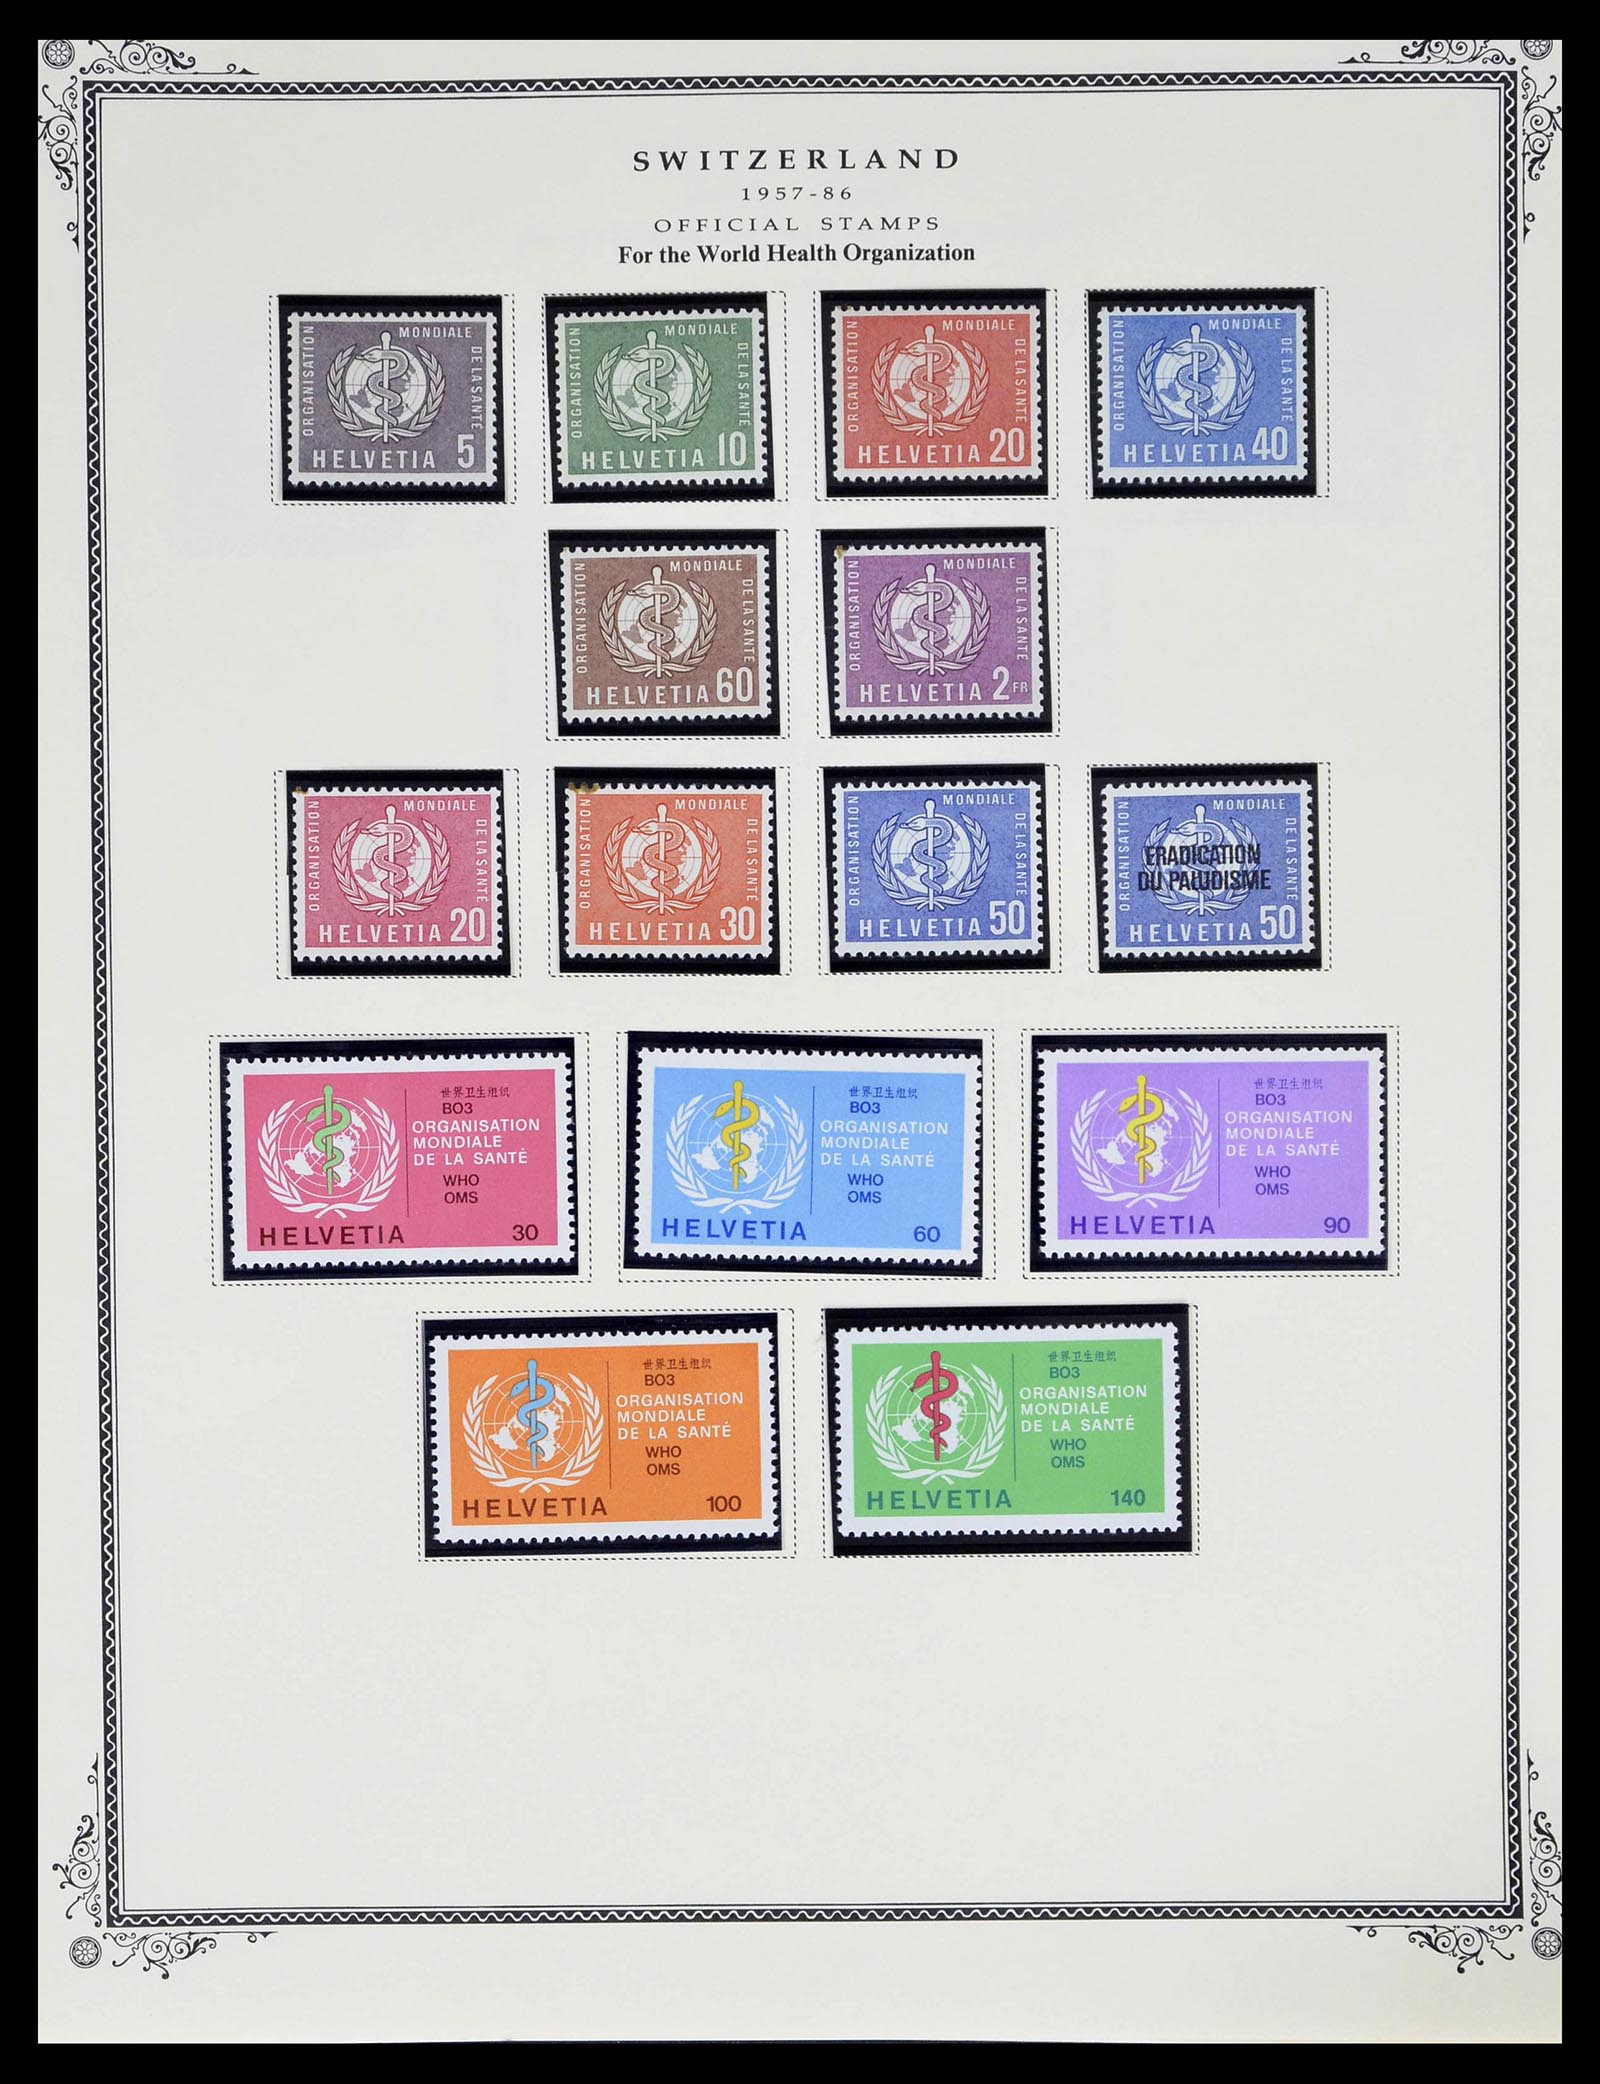 39178 0253 - Stamp collection 39178 Switzerland 1850-1989.